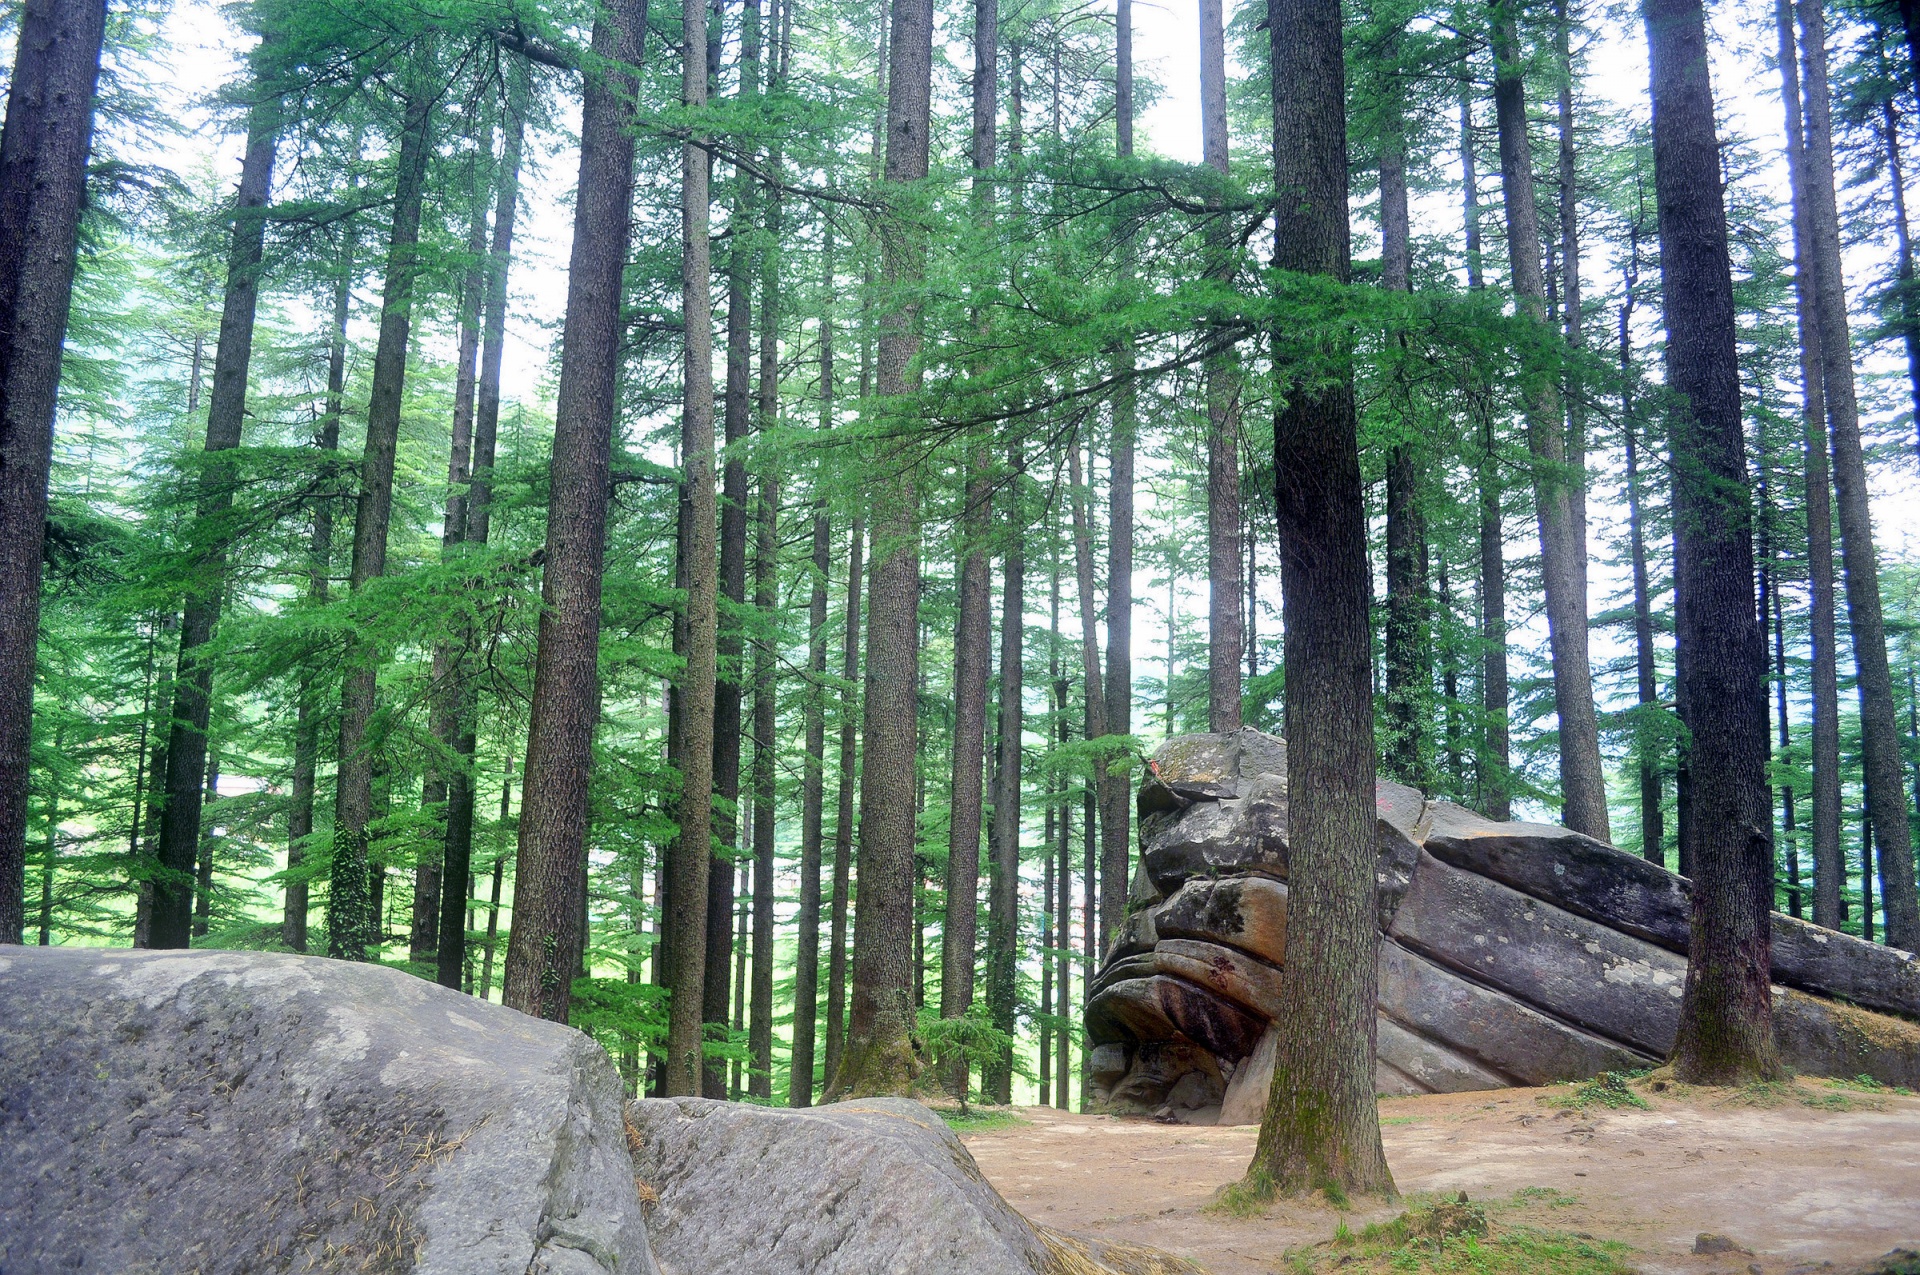 Bosque de pinos